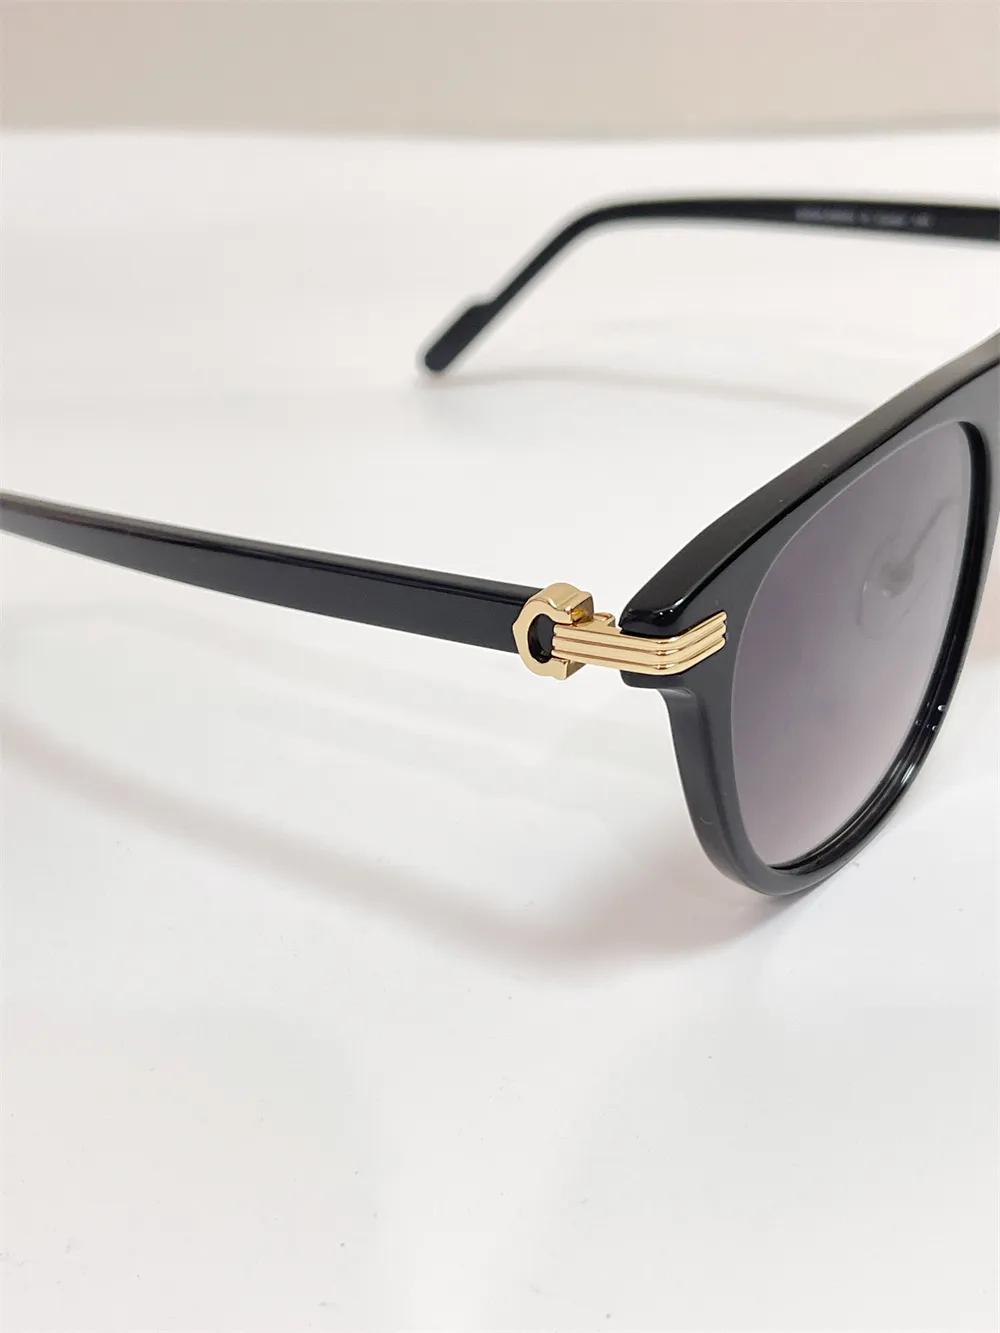 Luxury Designer Sunglasses For Men Women Brand Vintage Flat Top Glasses Square Shape Double Bridge Sunglass Fashion Eyewear 02002733